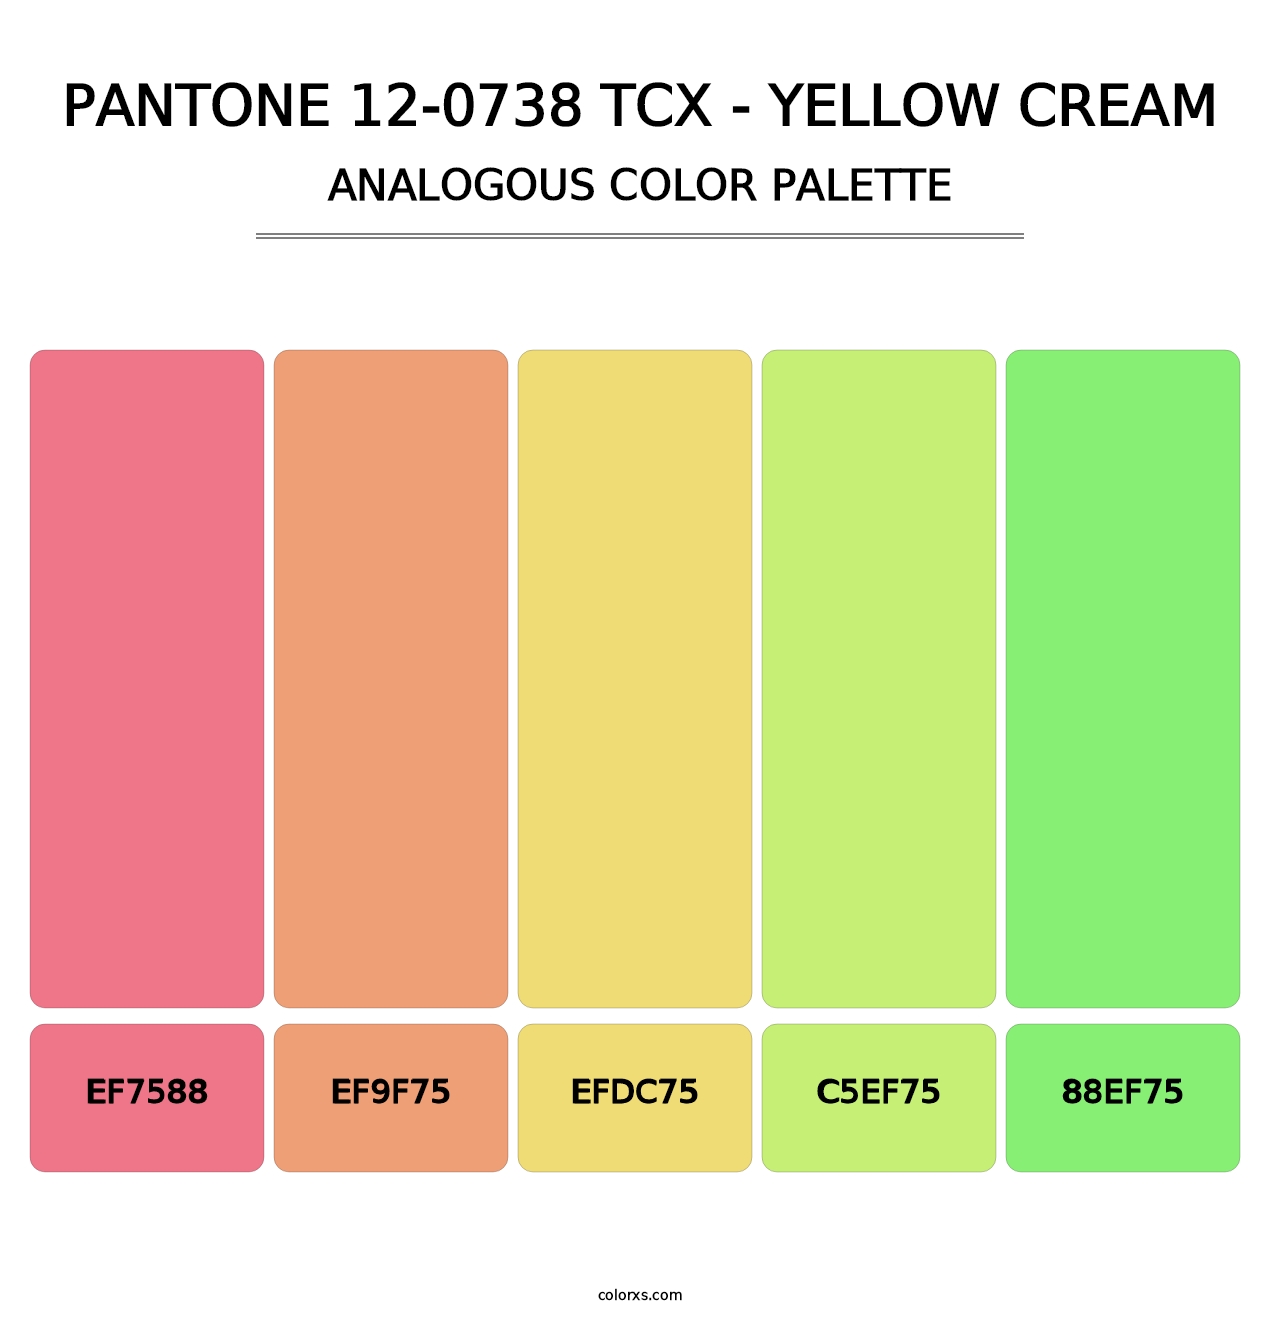 PANTONE 12-0738 TCX - Yellow Cream - Analogous Color Palette